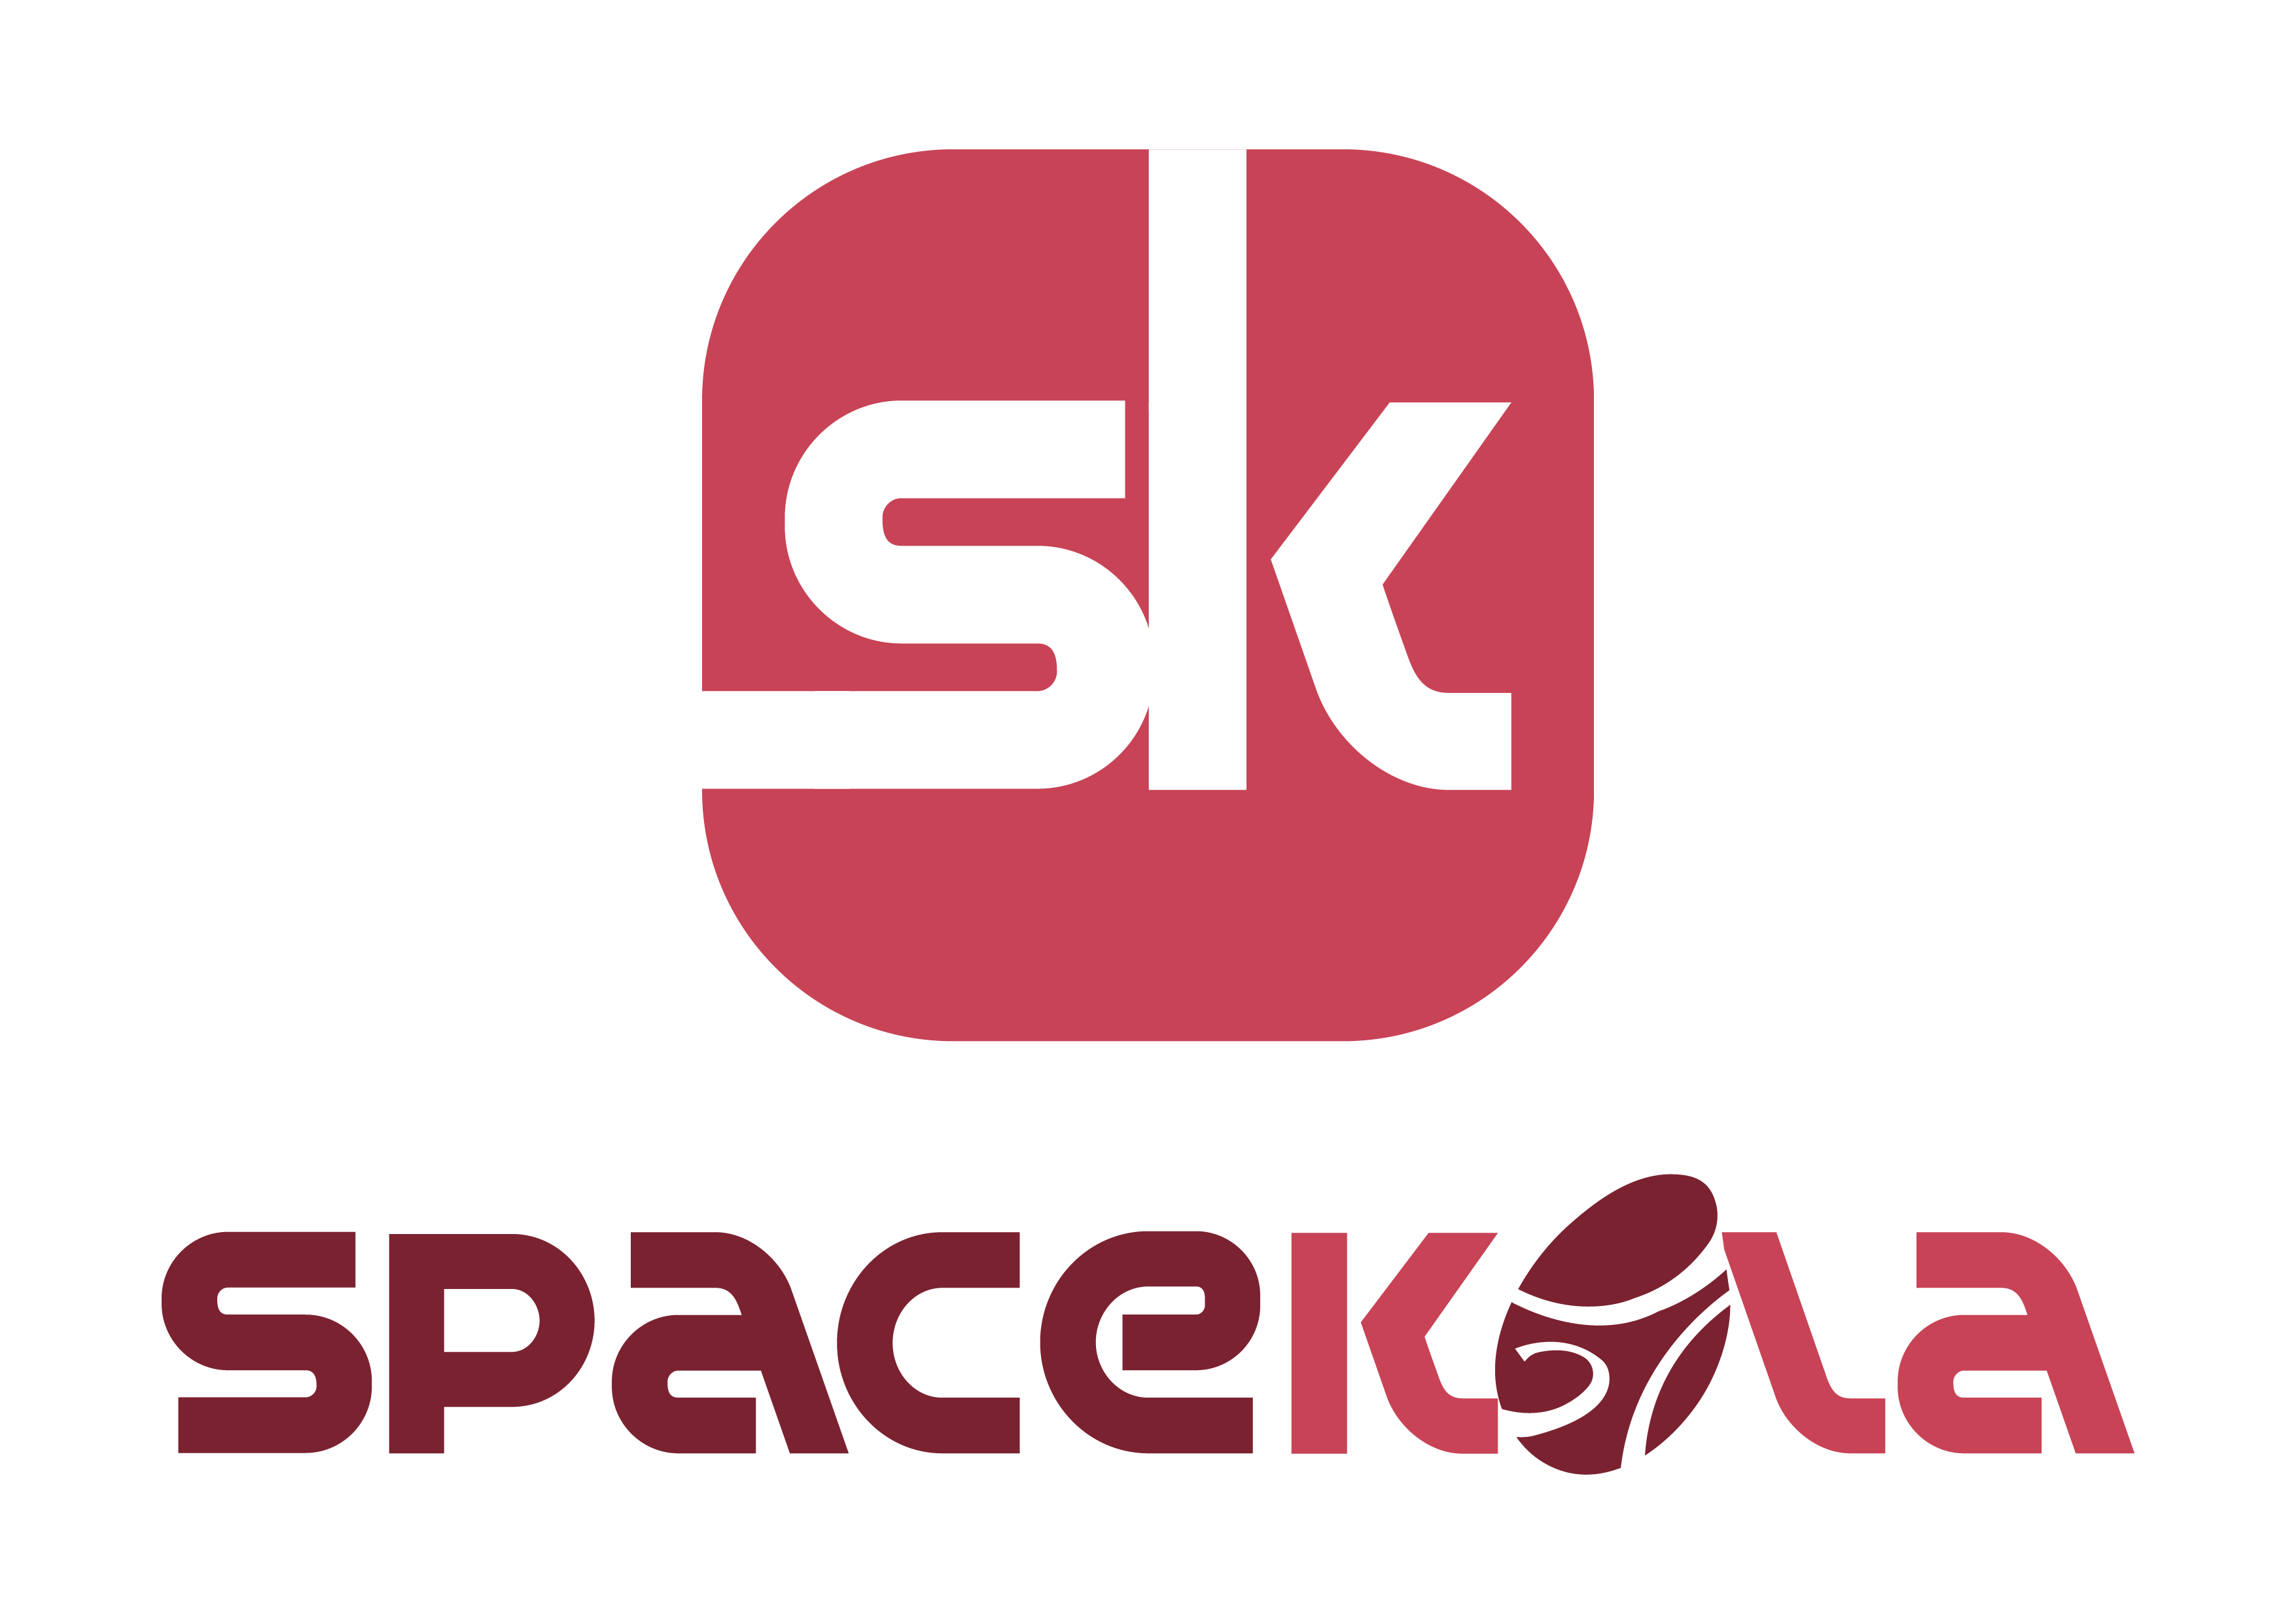 Spacekola